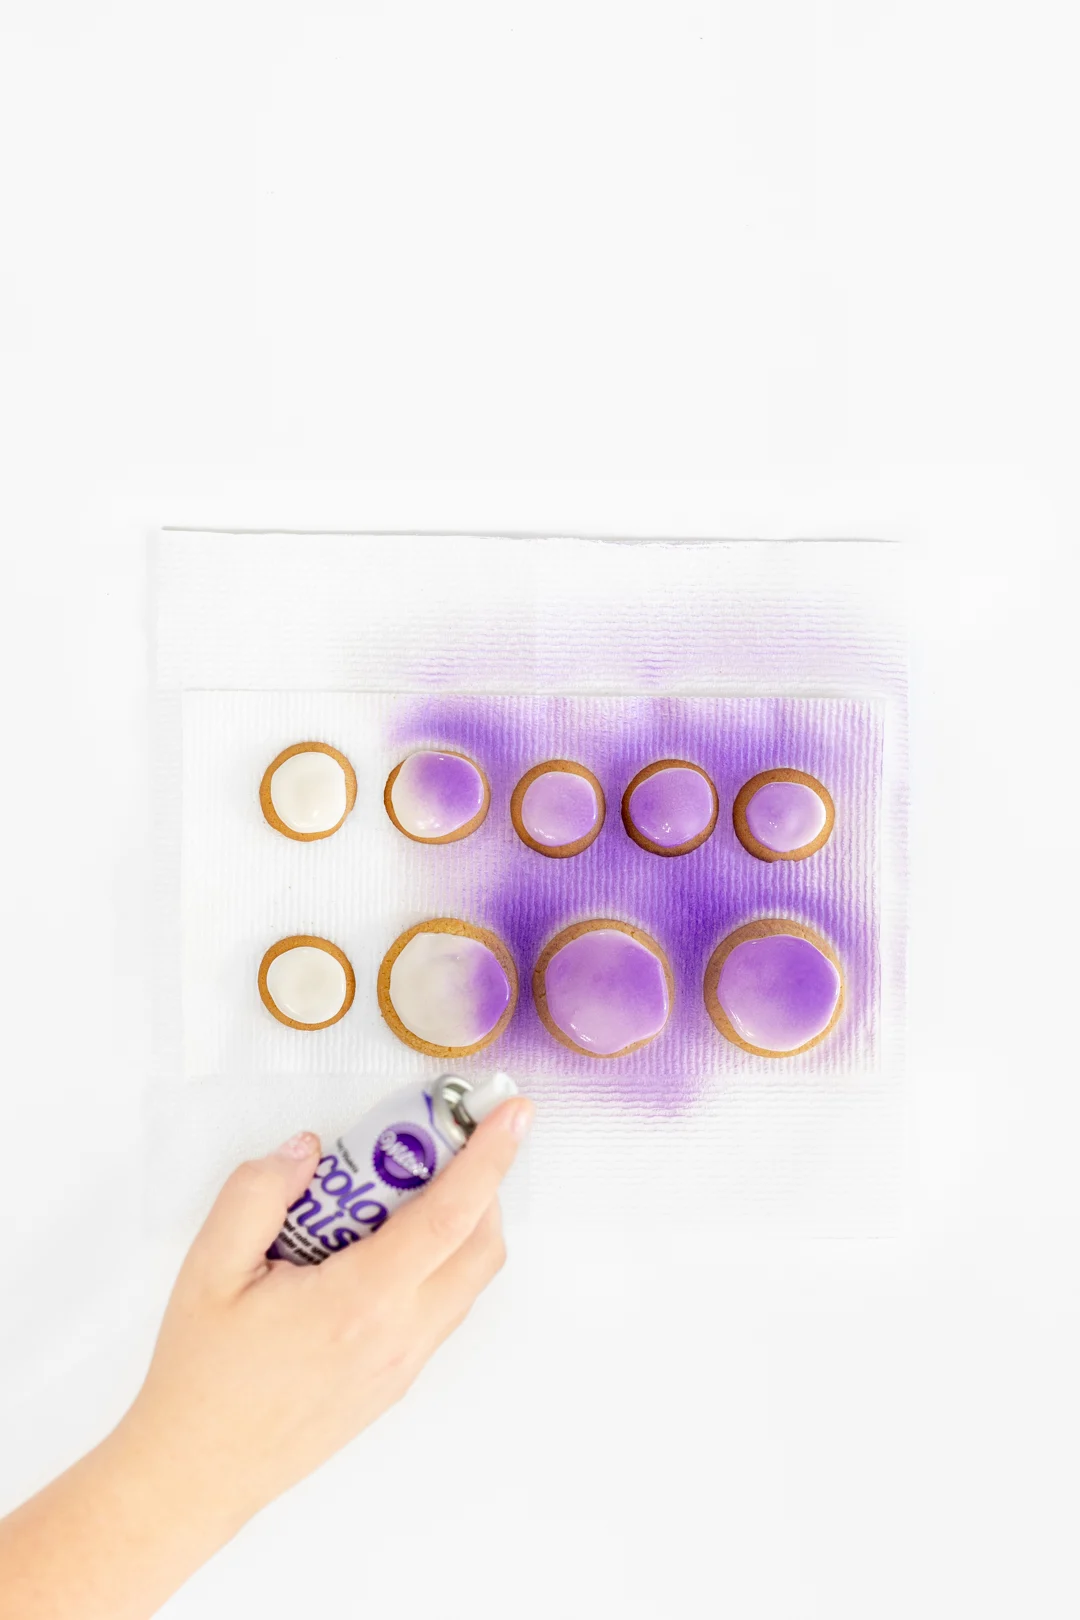 spraying edible purple mist onto cookies